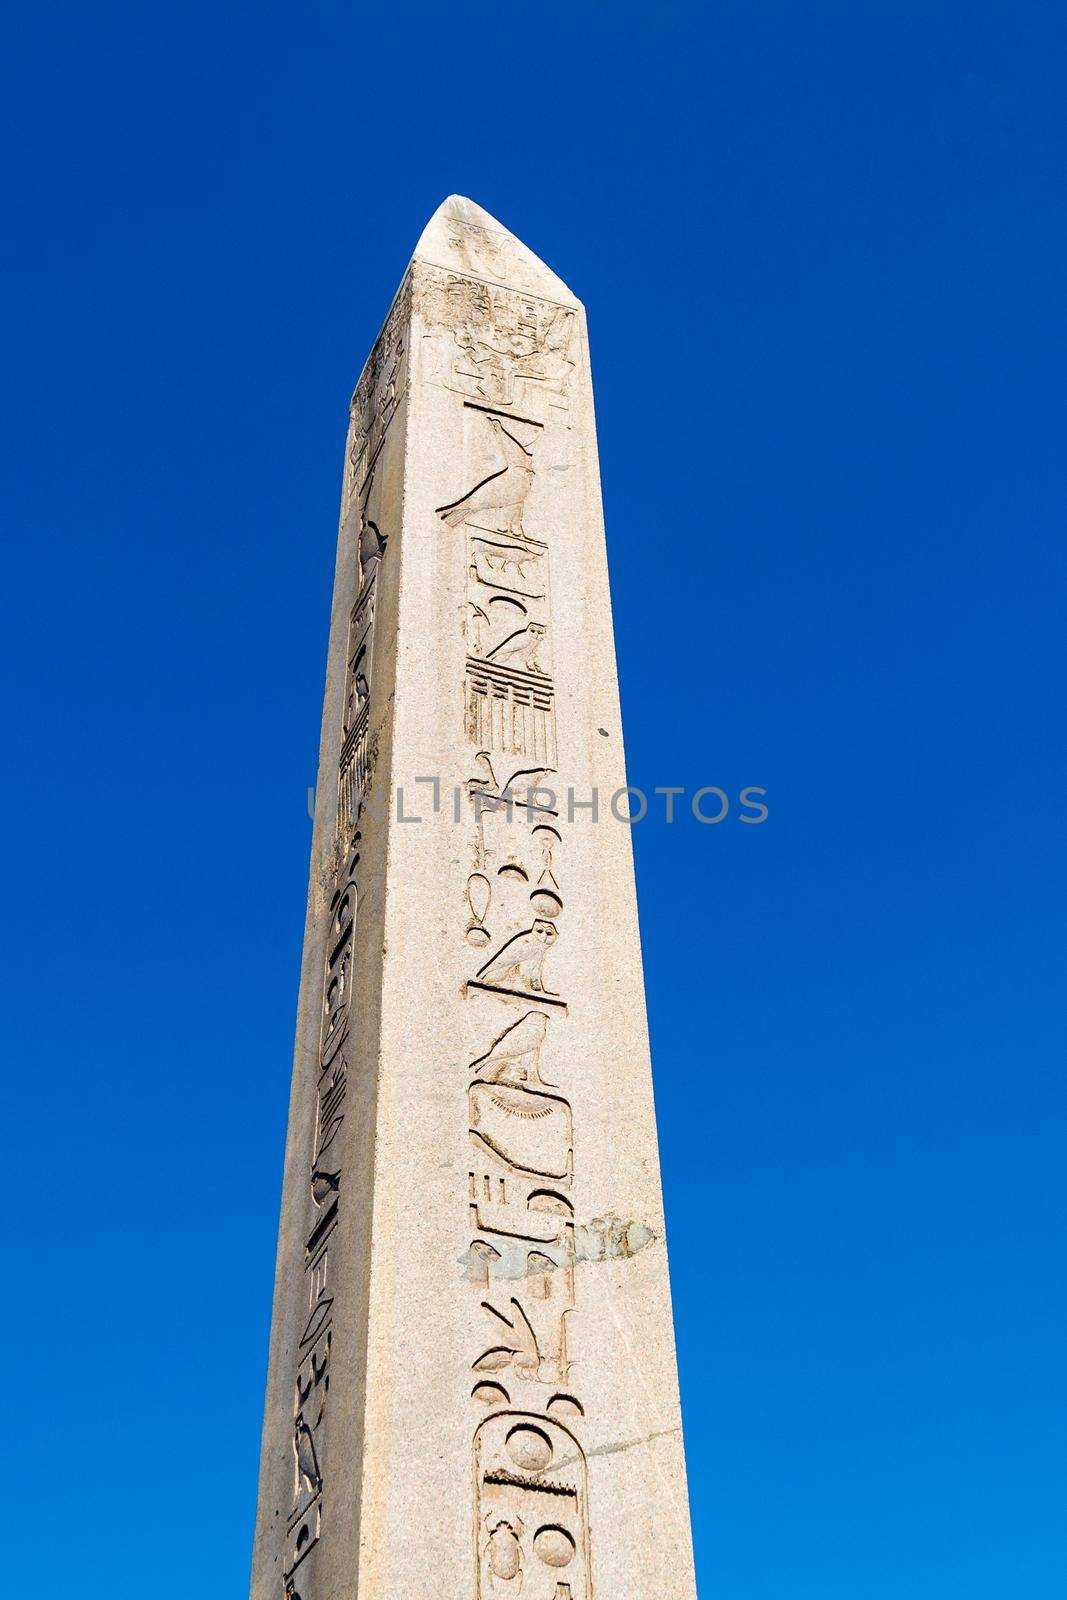 Obelisk in Hippodrome of Constantinople in Sultan Ahmet Square, Istanbul, Turkey by Nuamfolio